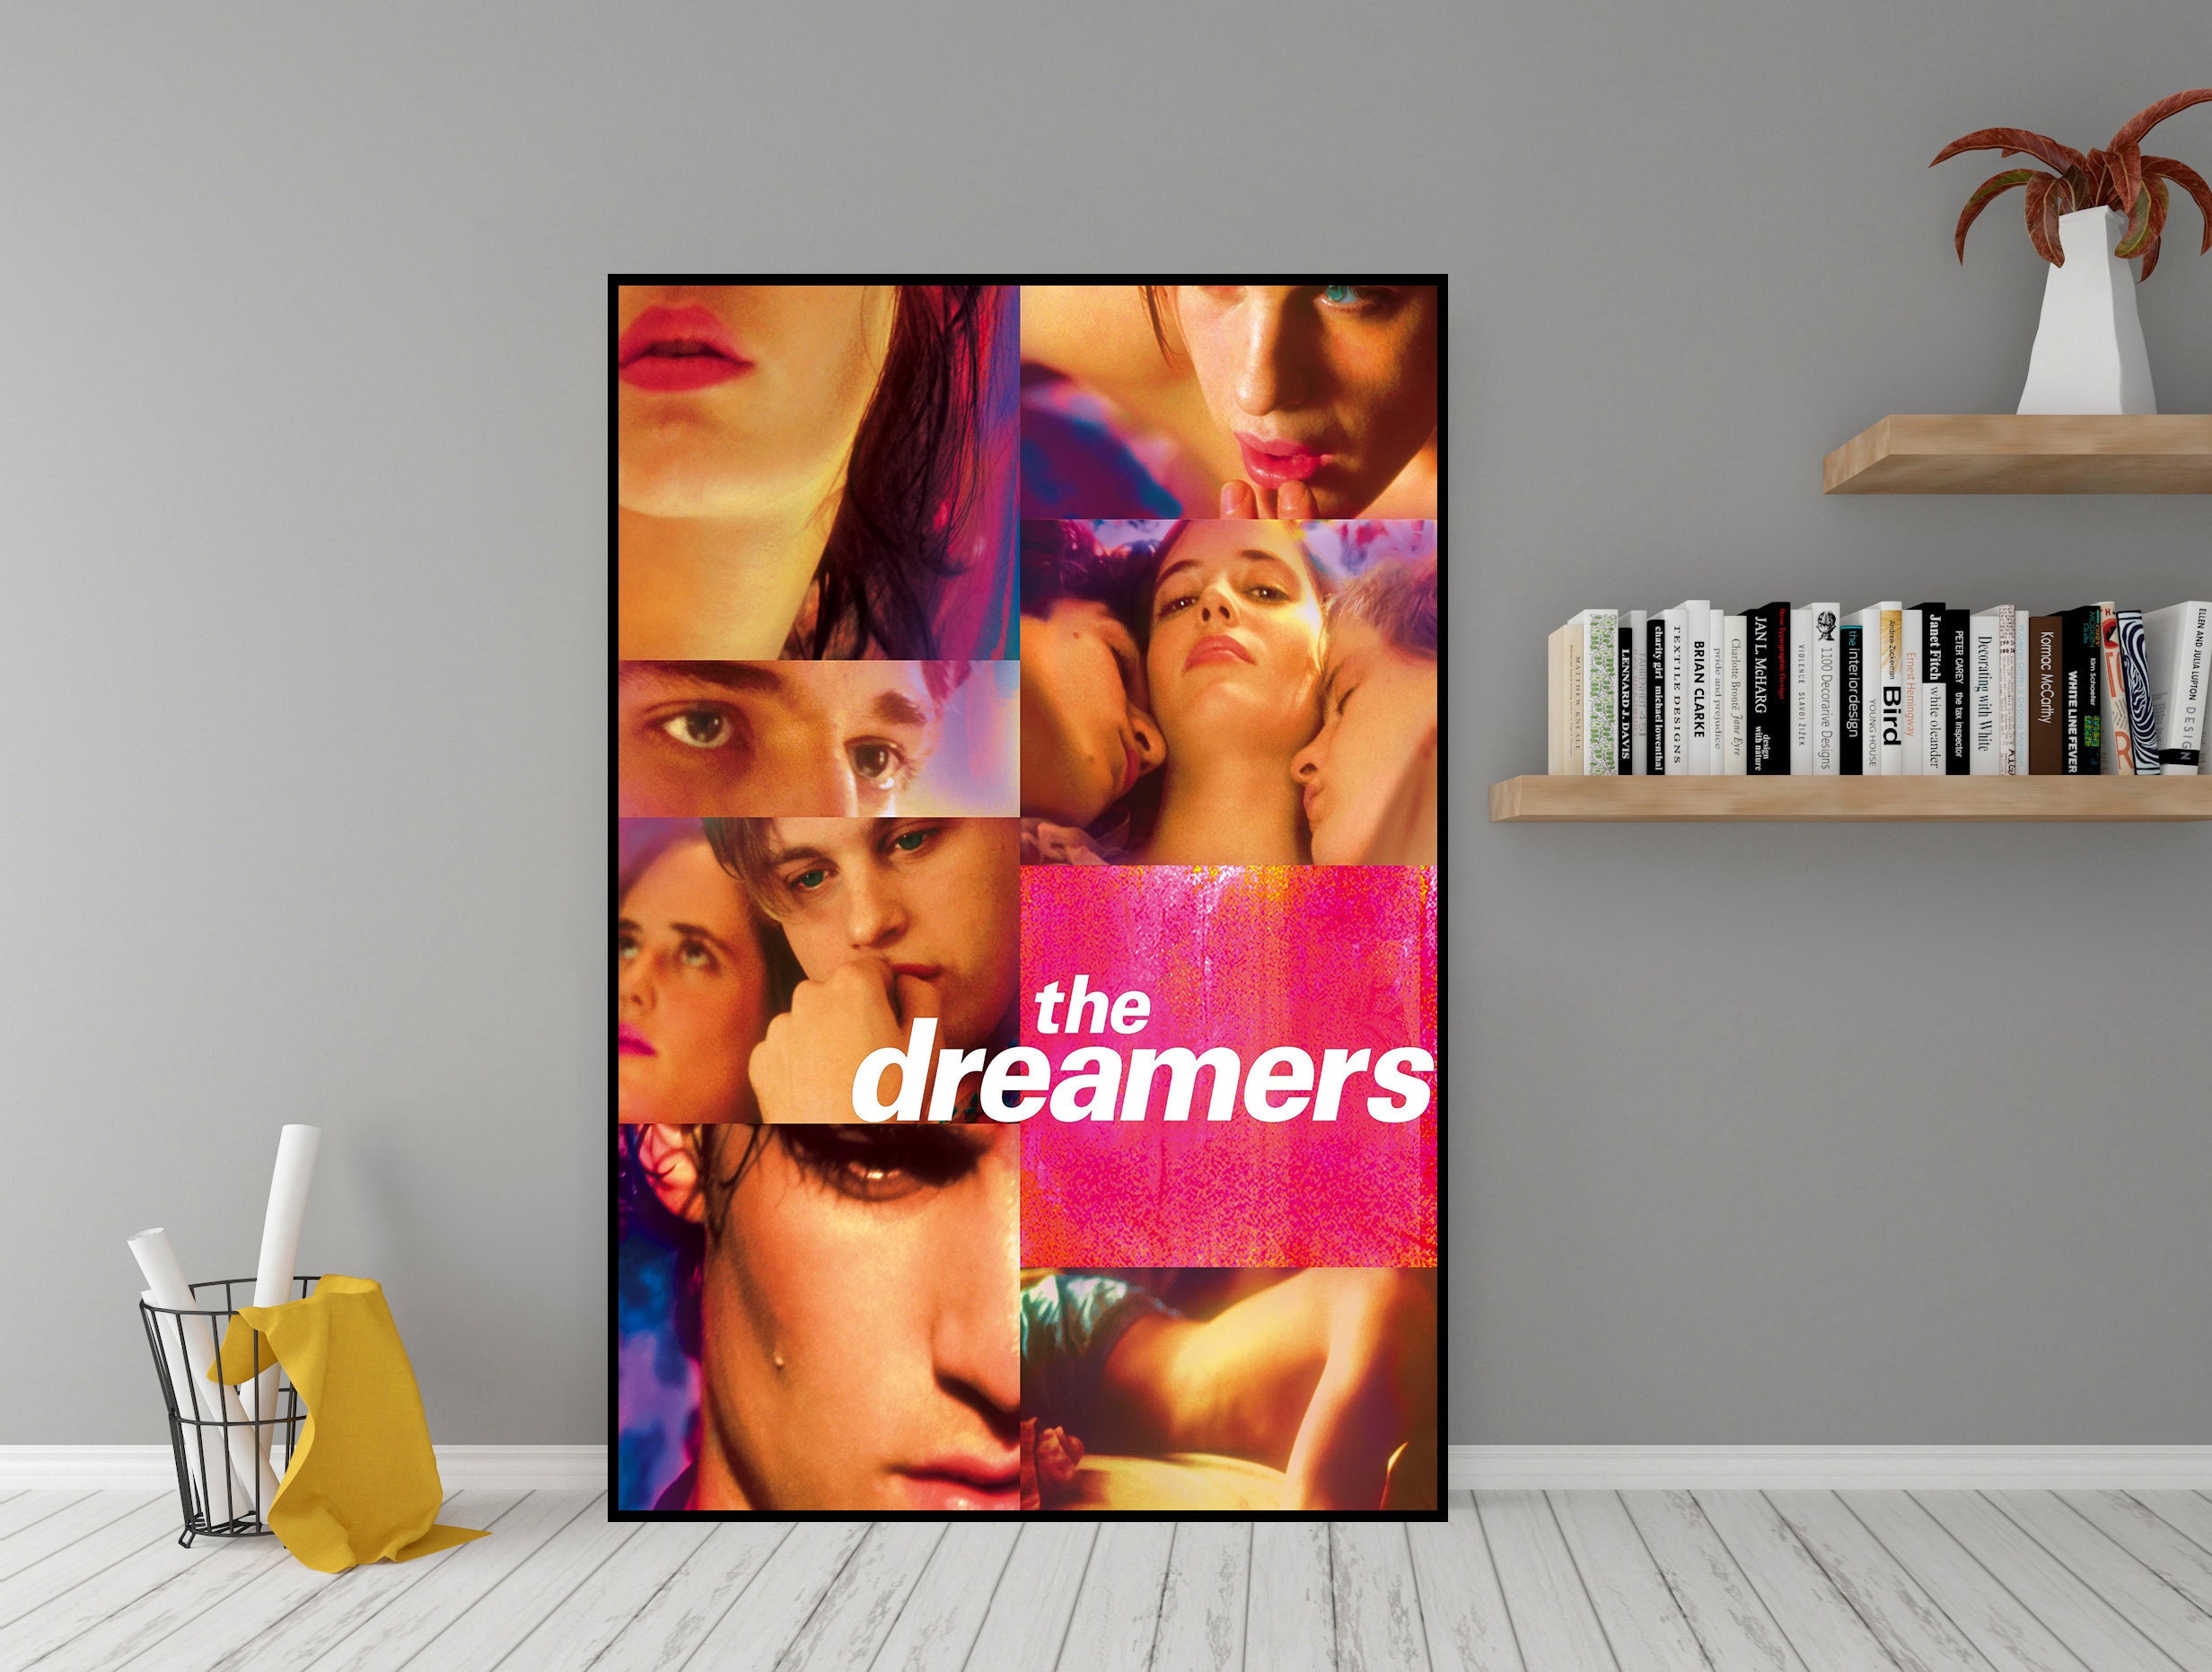 The Dreamers - Minimalist Movie Poster - Bernardo Bertolucci Poster for  Sale by Not a Lizard